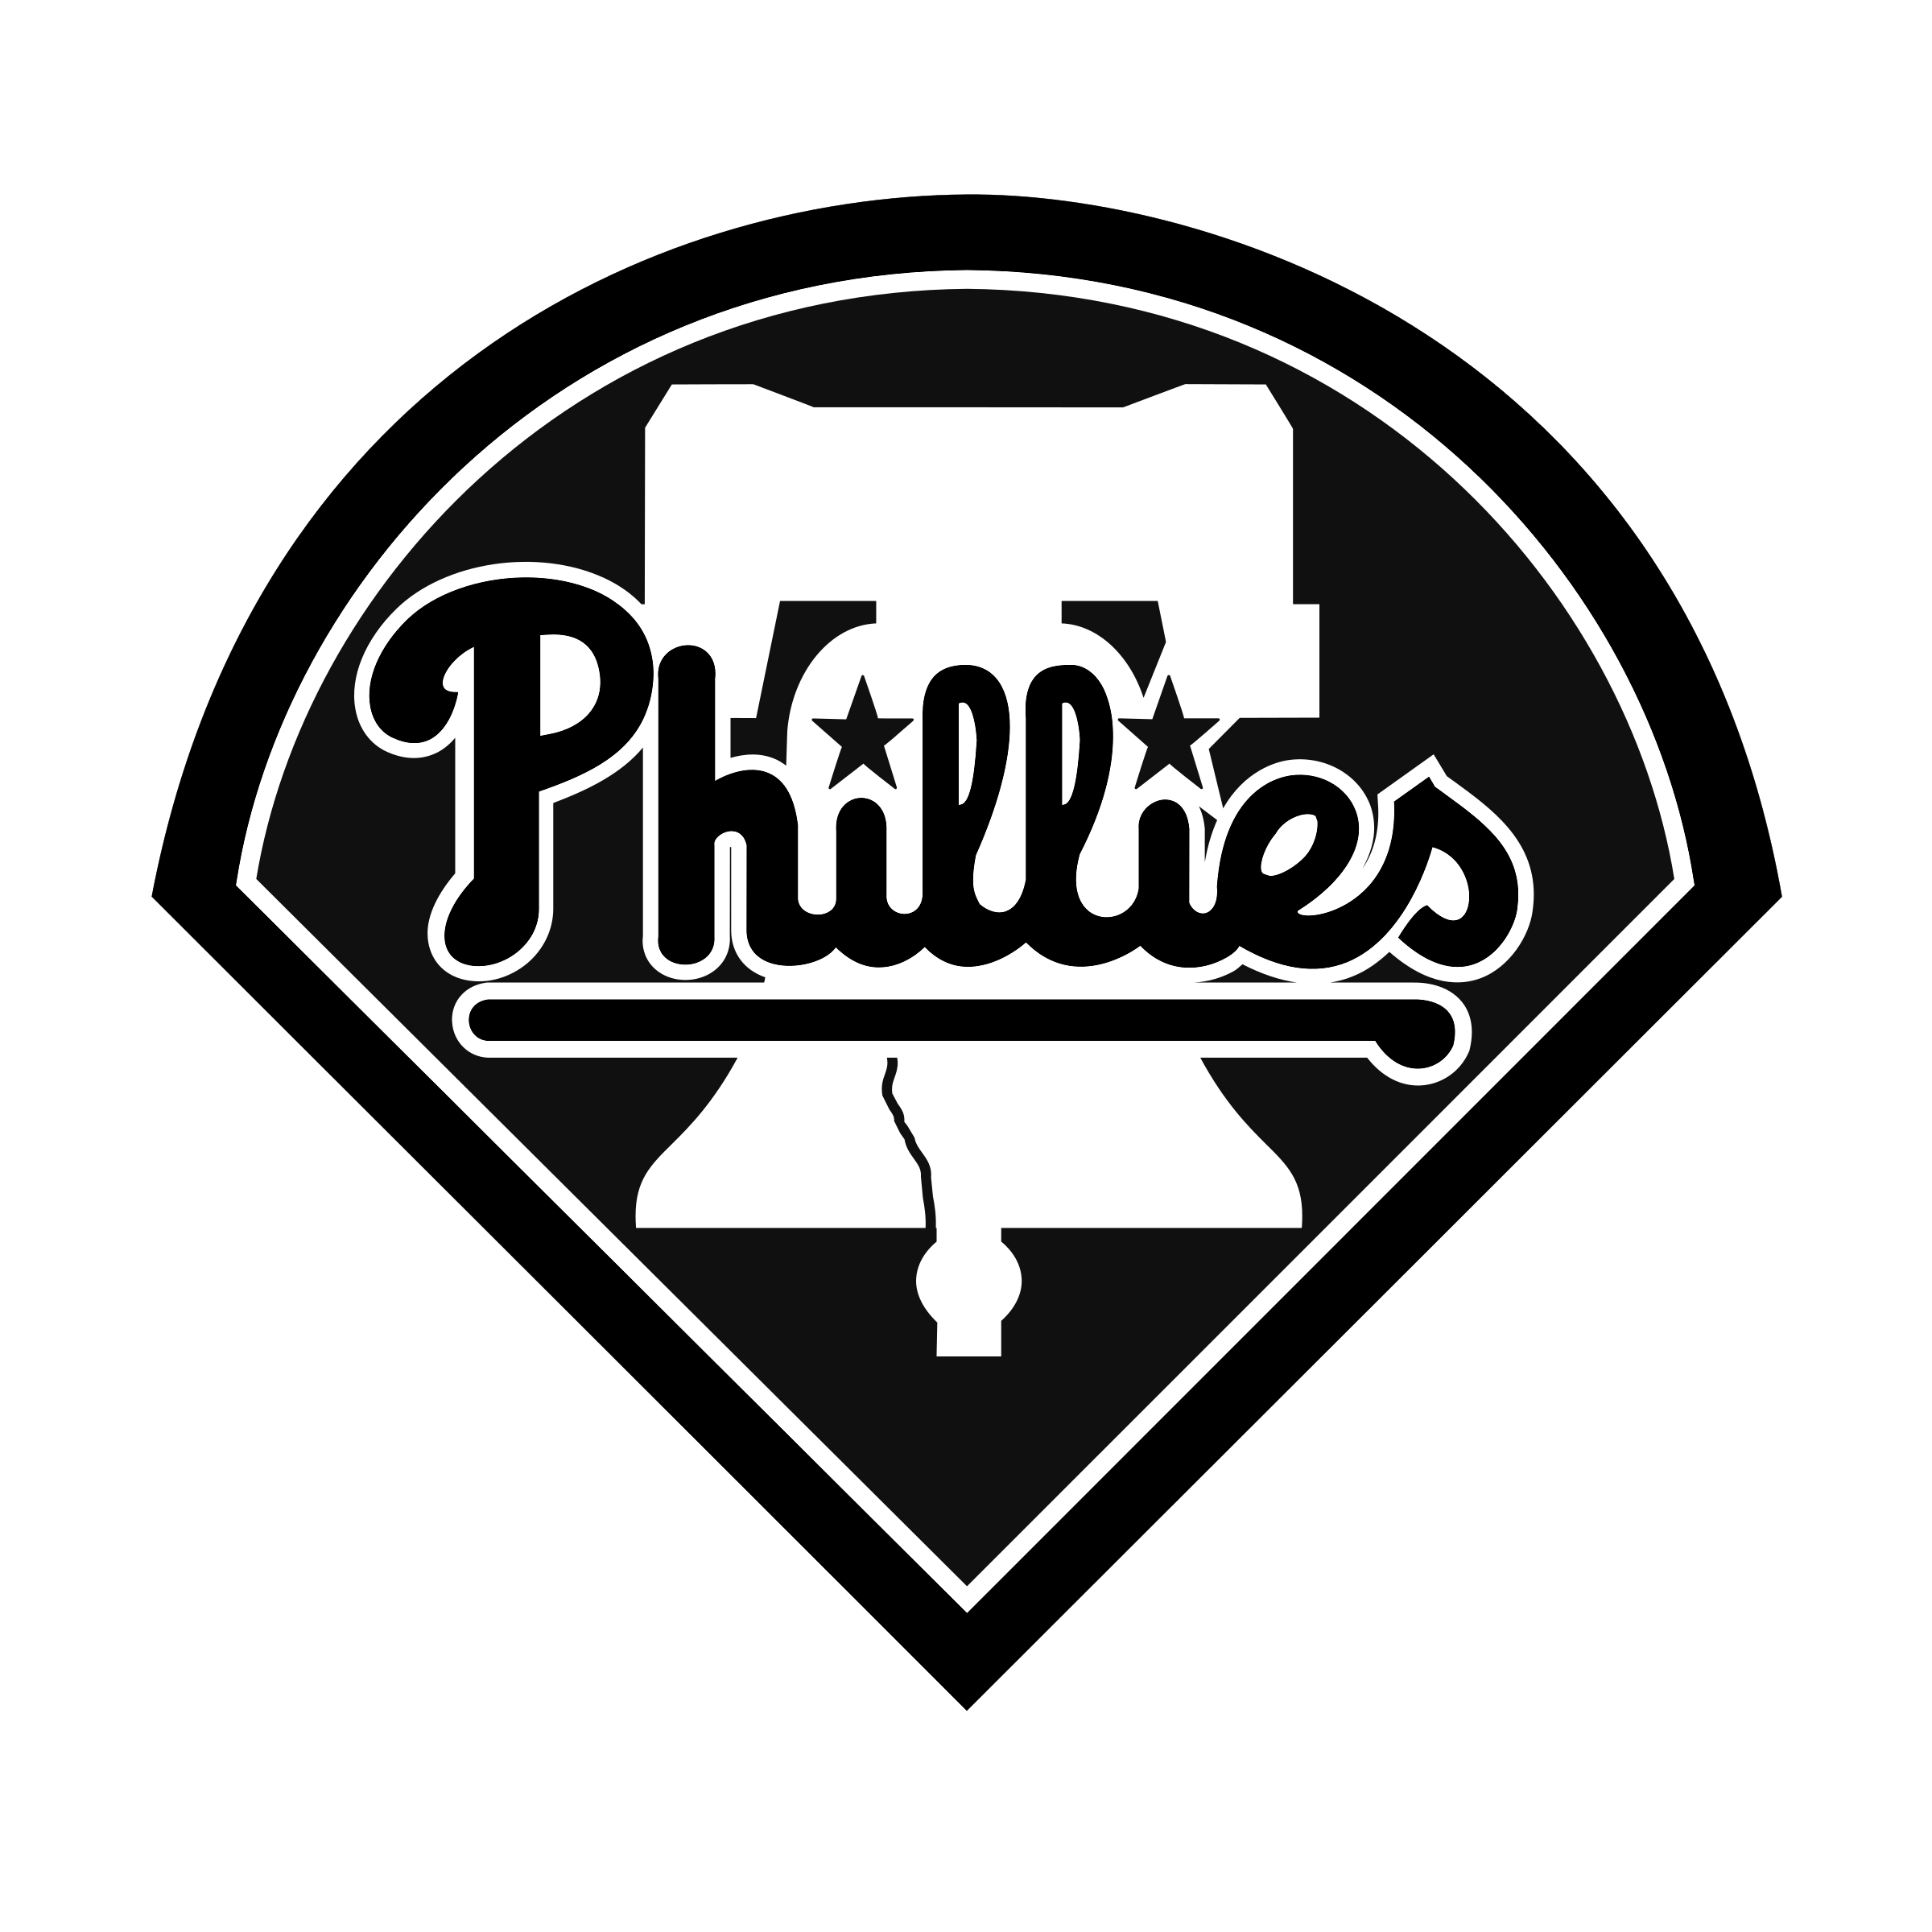 White Phillies Logo - Philadelphia Phillies Logo PNG Transparent & SVG Vector - Freebie Supply